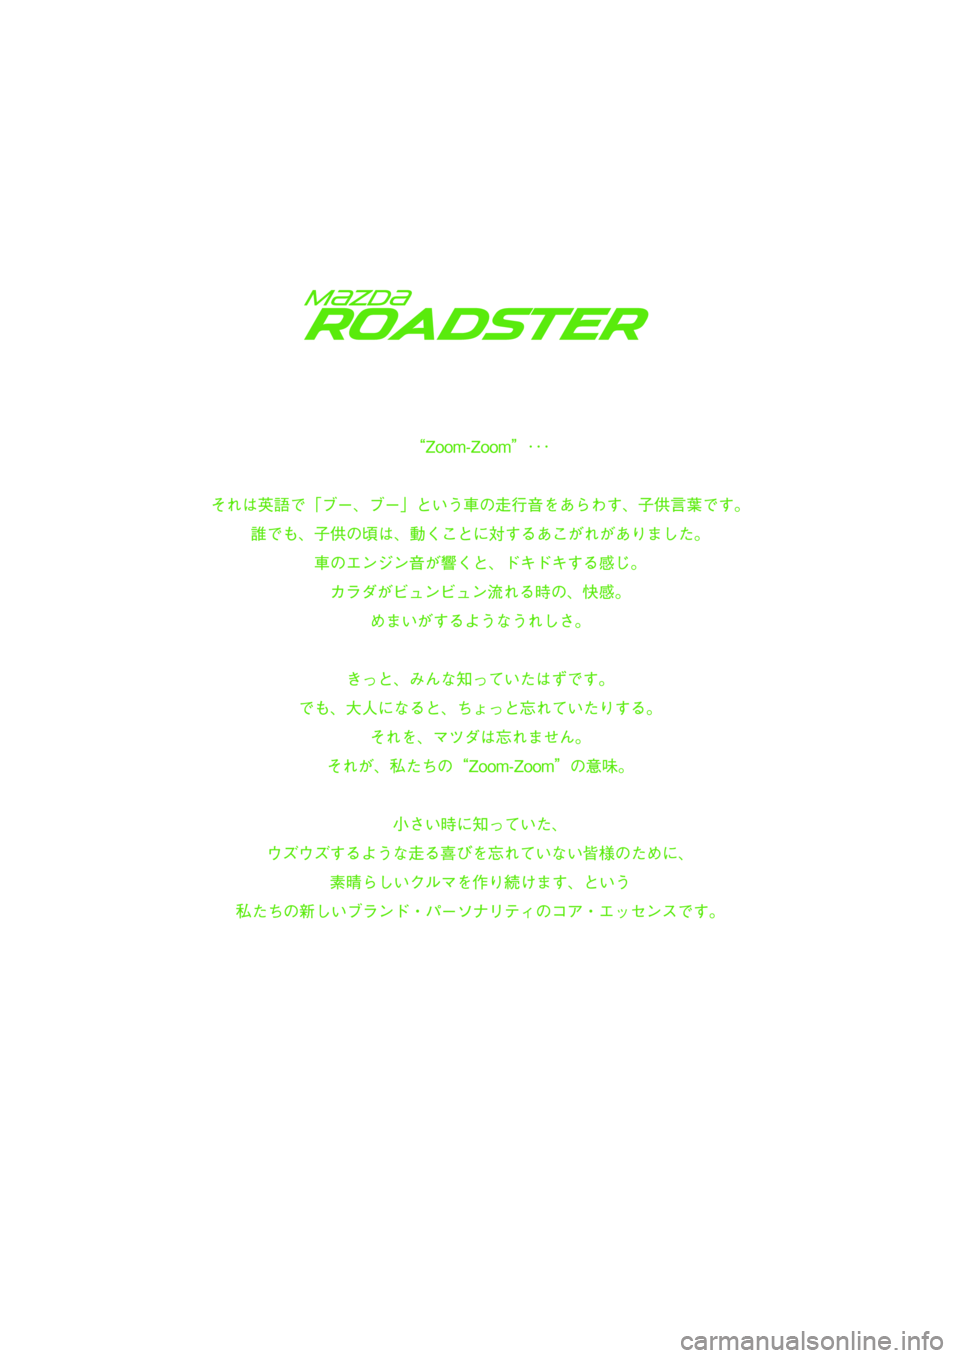 MAZDA MODEL ROADSTER 2018  取扱説明書 (ロードスター) (in Japanese) ROADSTER_Rニ_Edition3_QuickGuide.indb   1ROADSTER_Rニ_Edition3_QuickGuide.indb   12017/03/20   16:26:202017/03/20   16:26:20 